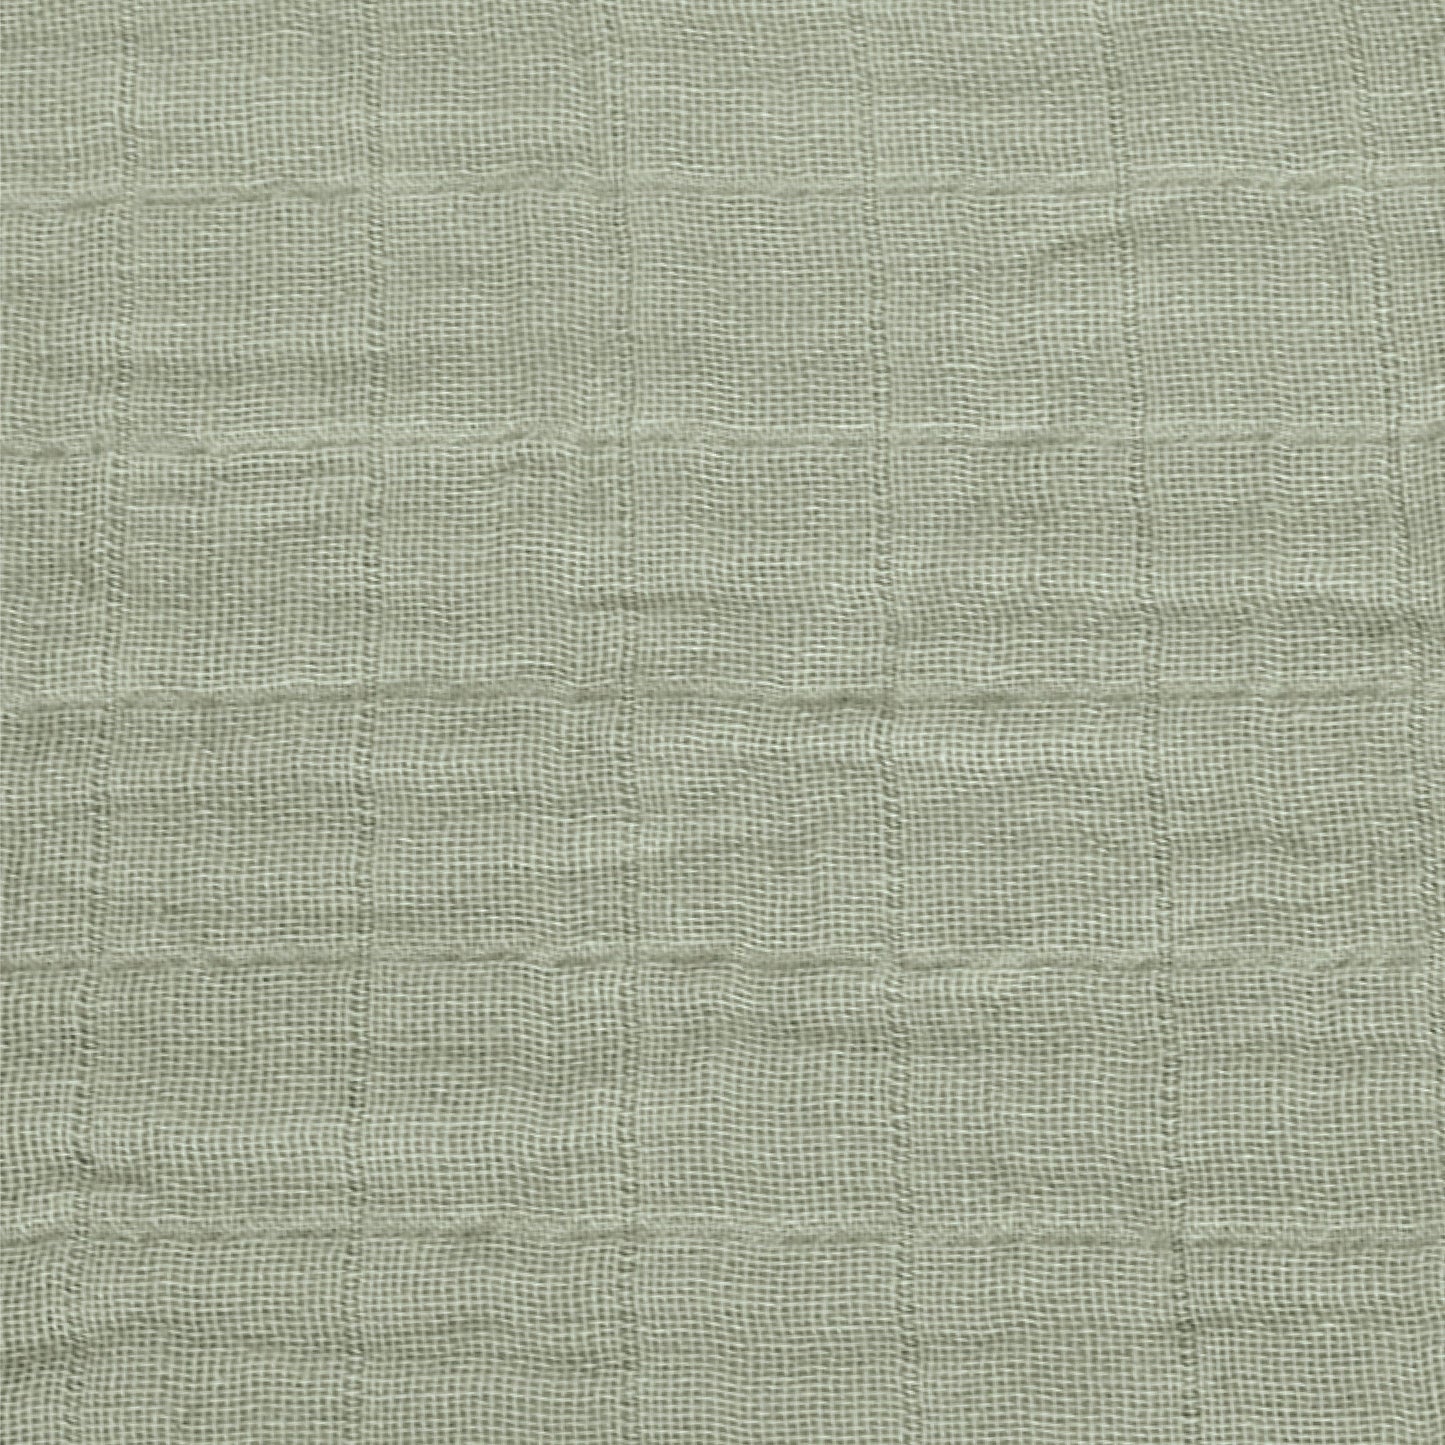 Cotton muslin sleep bag - Kaki (0.7 tog)